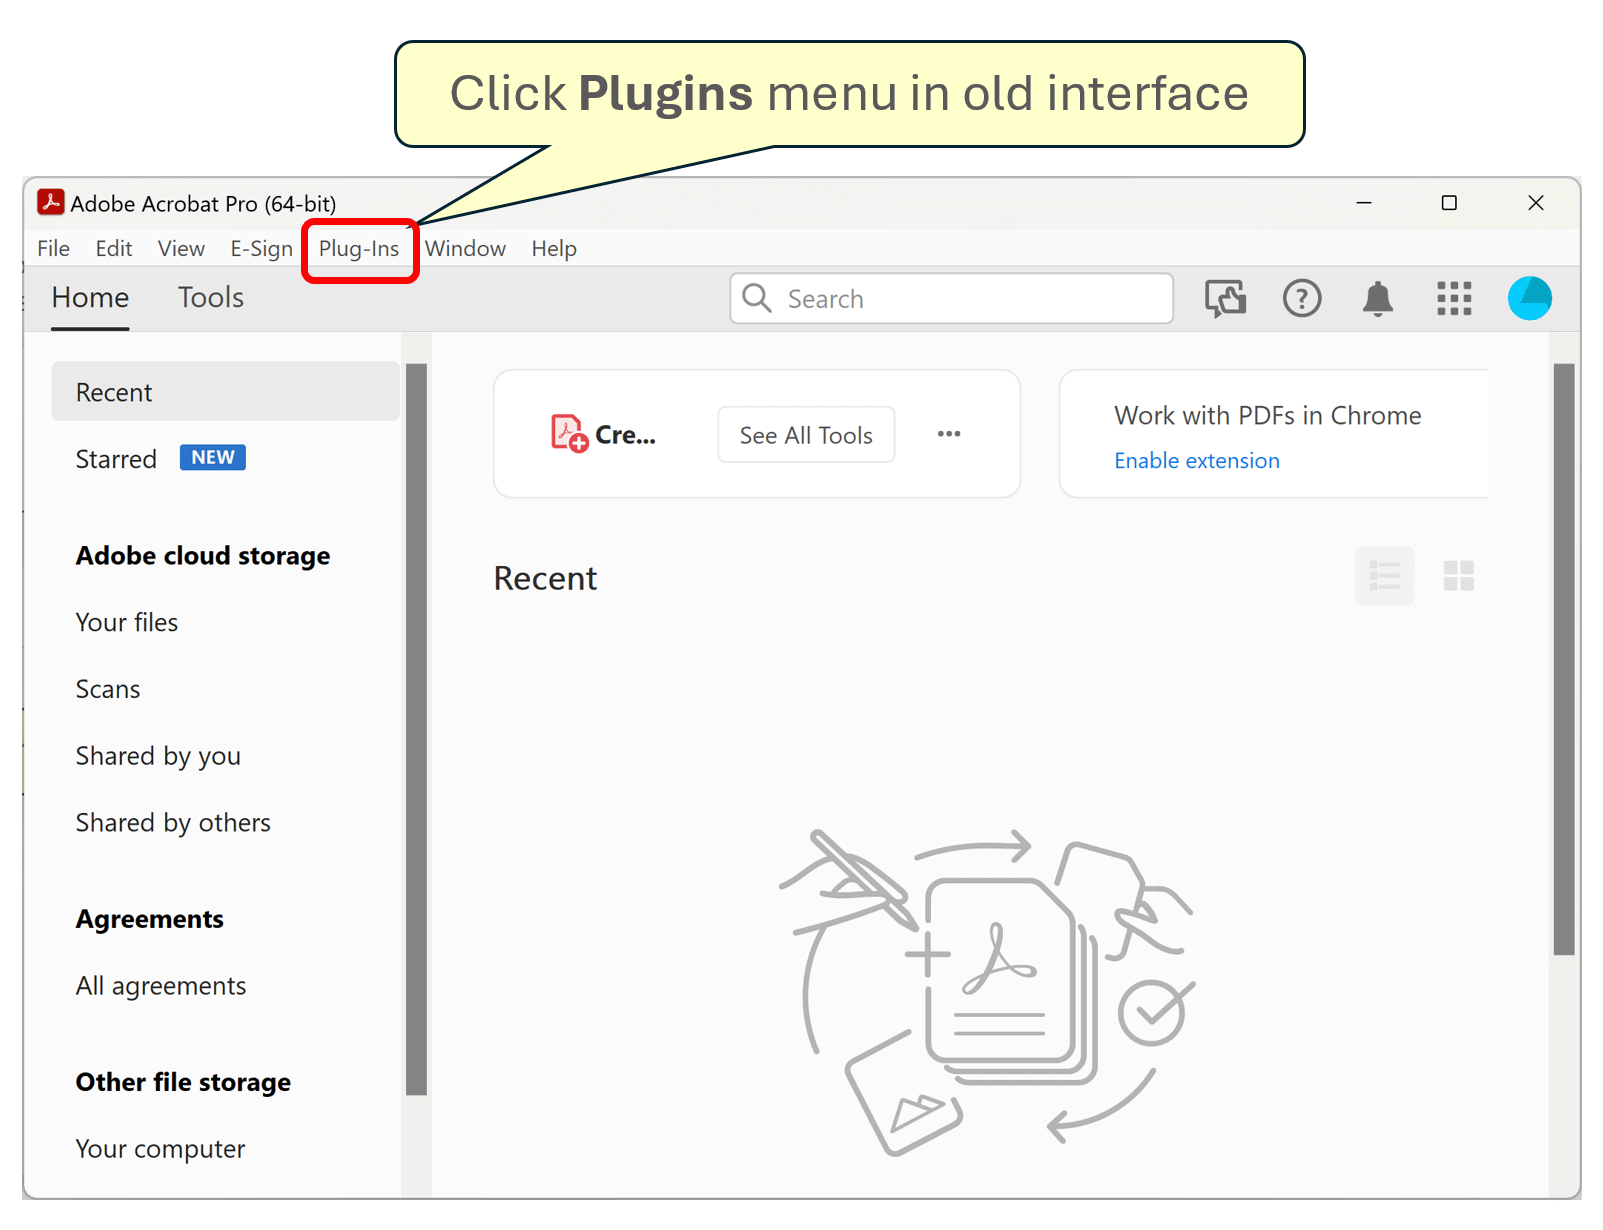 Plugins menu in old Adobe Acrobat interface